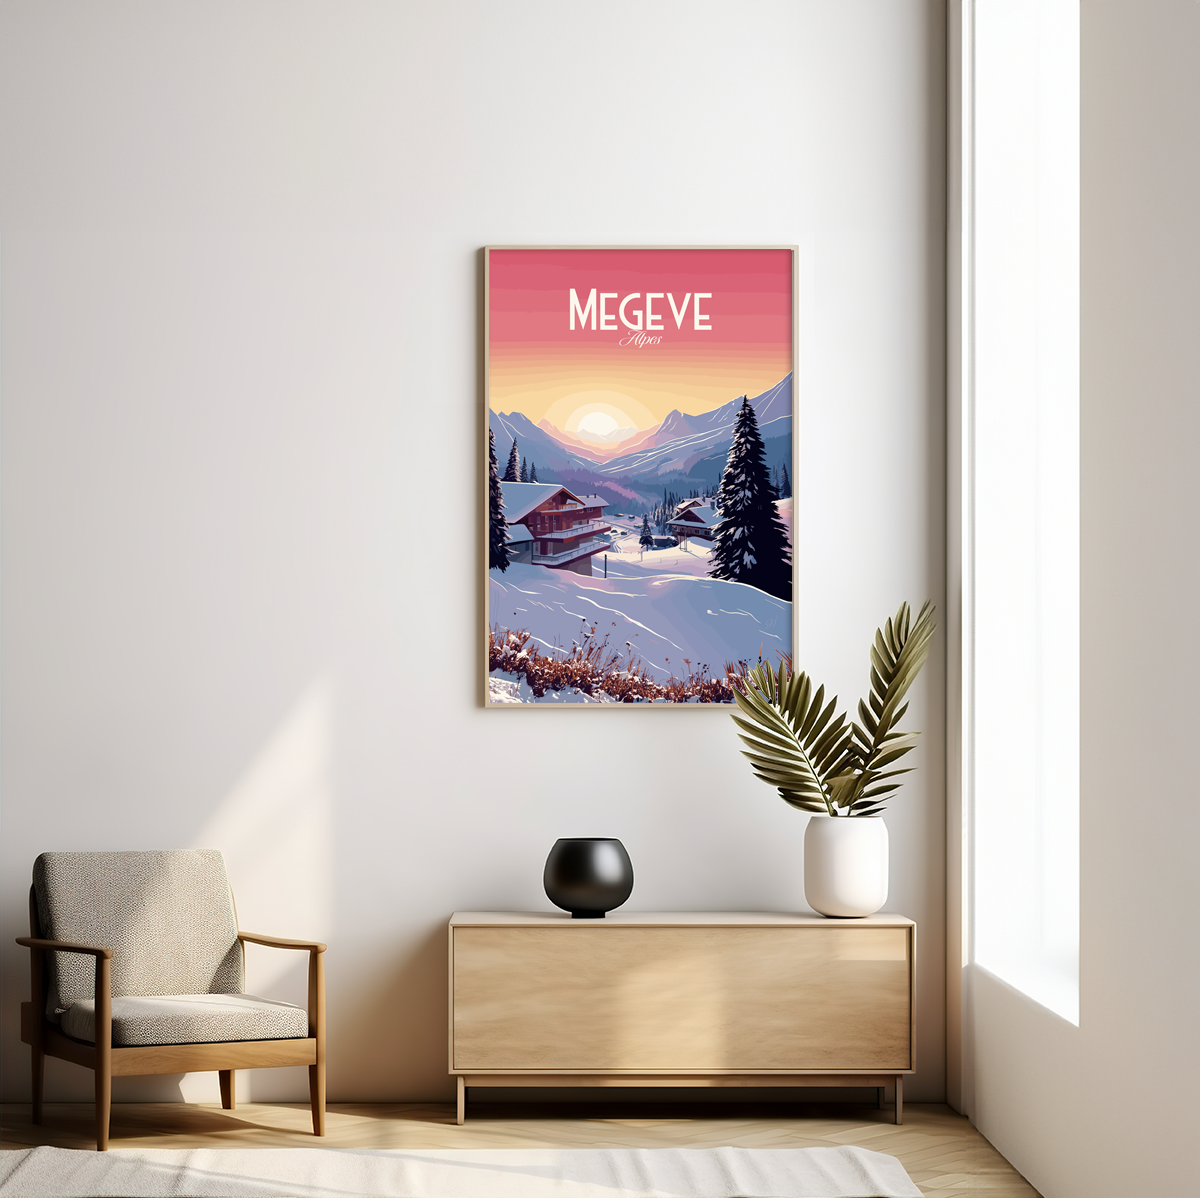 Megeve - Village poster by bon voyage design